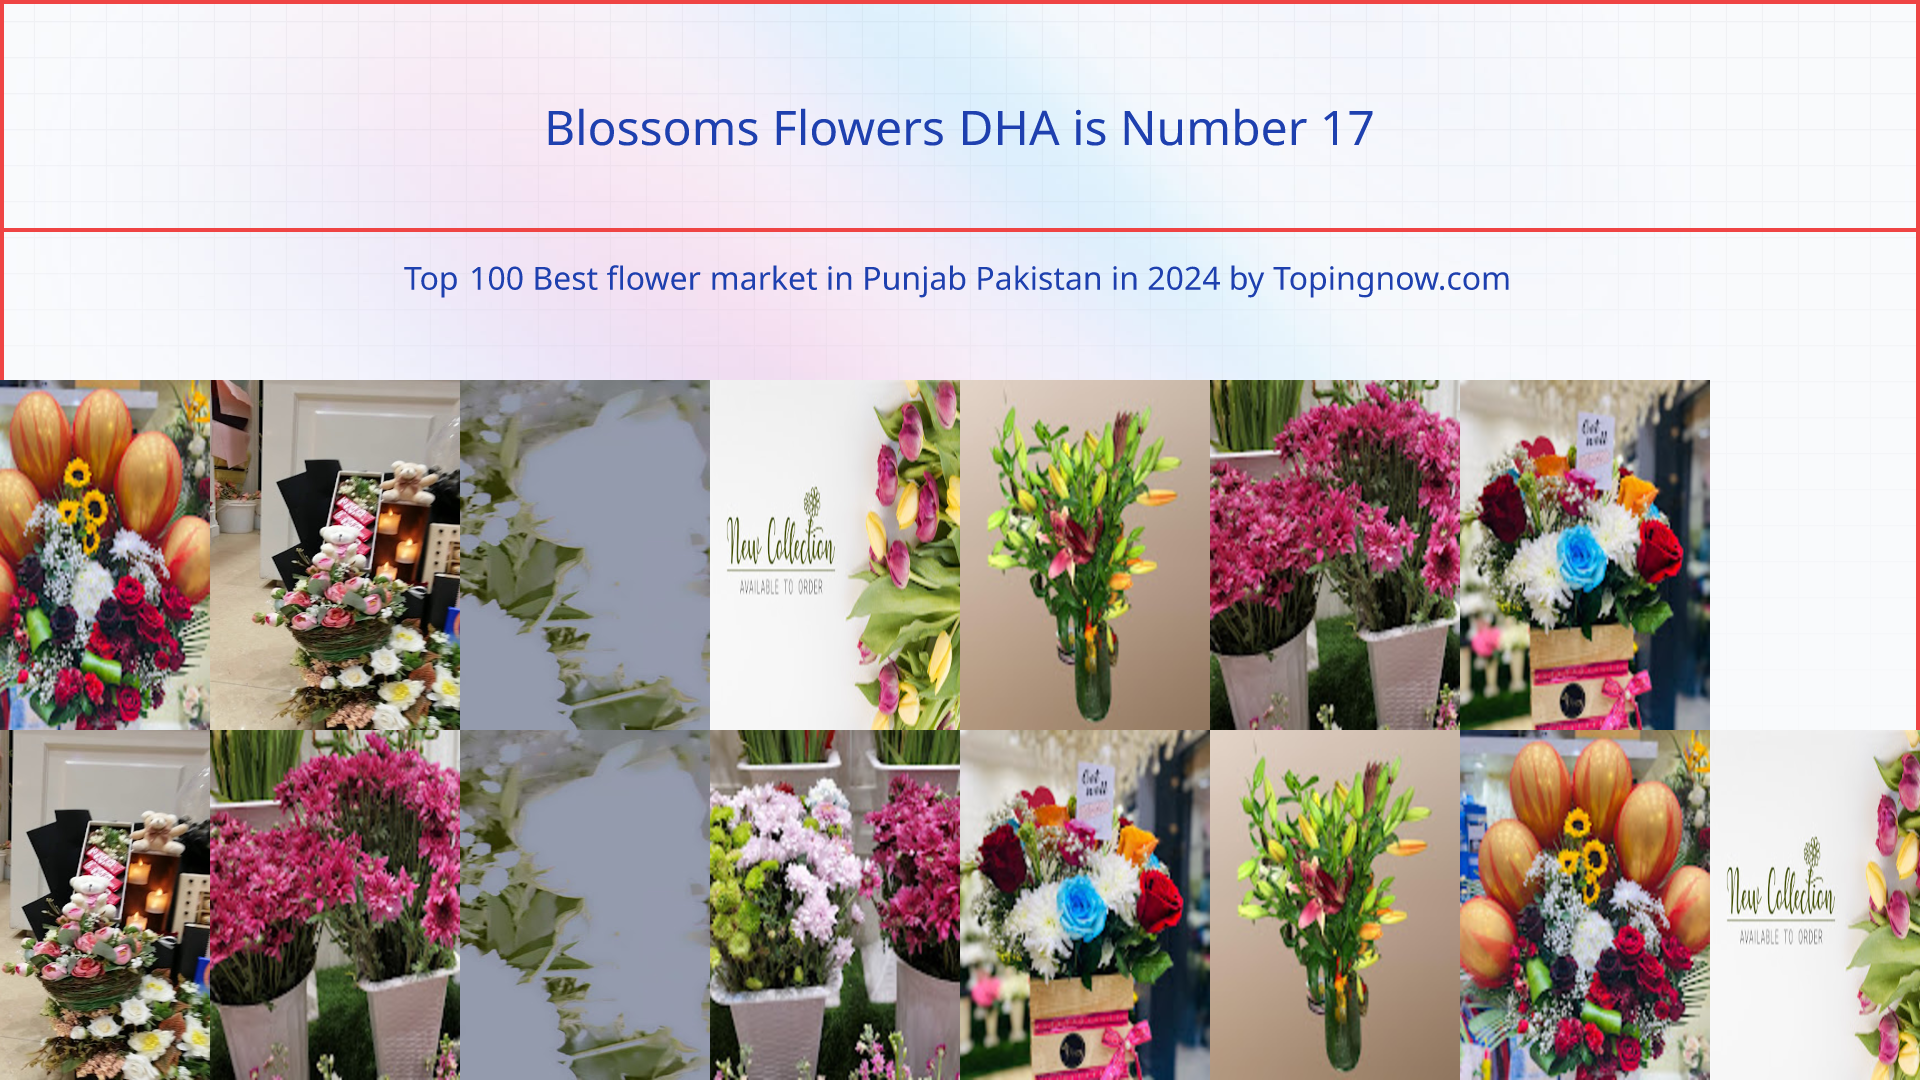 Blossoms Flowers DHA: Top 100 Best flower market in Punjab Pakistan in 2024